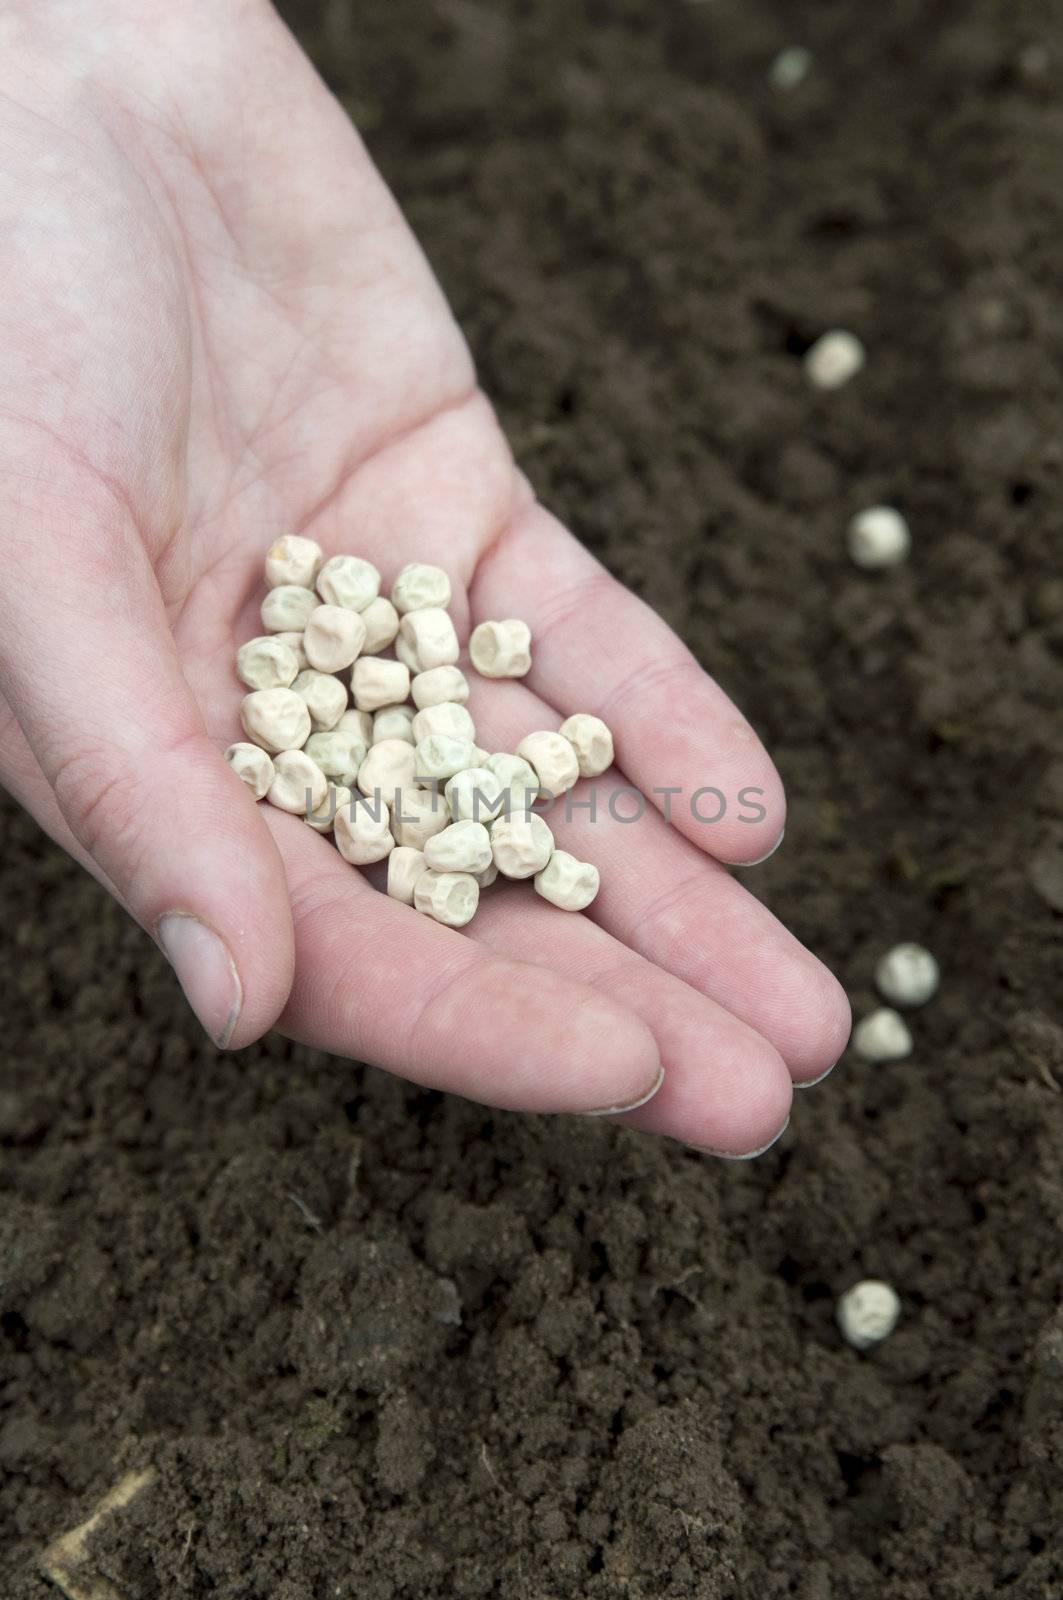 planting peas by sarka